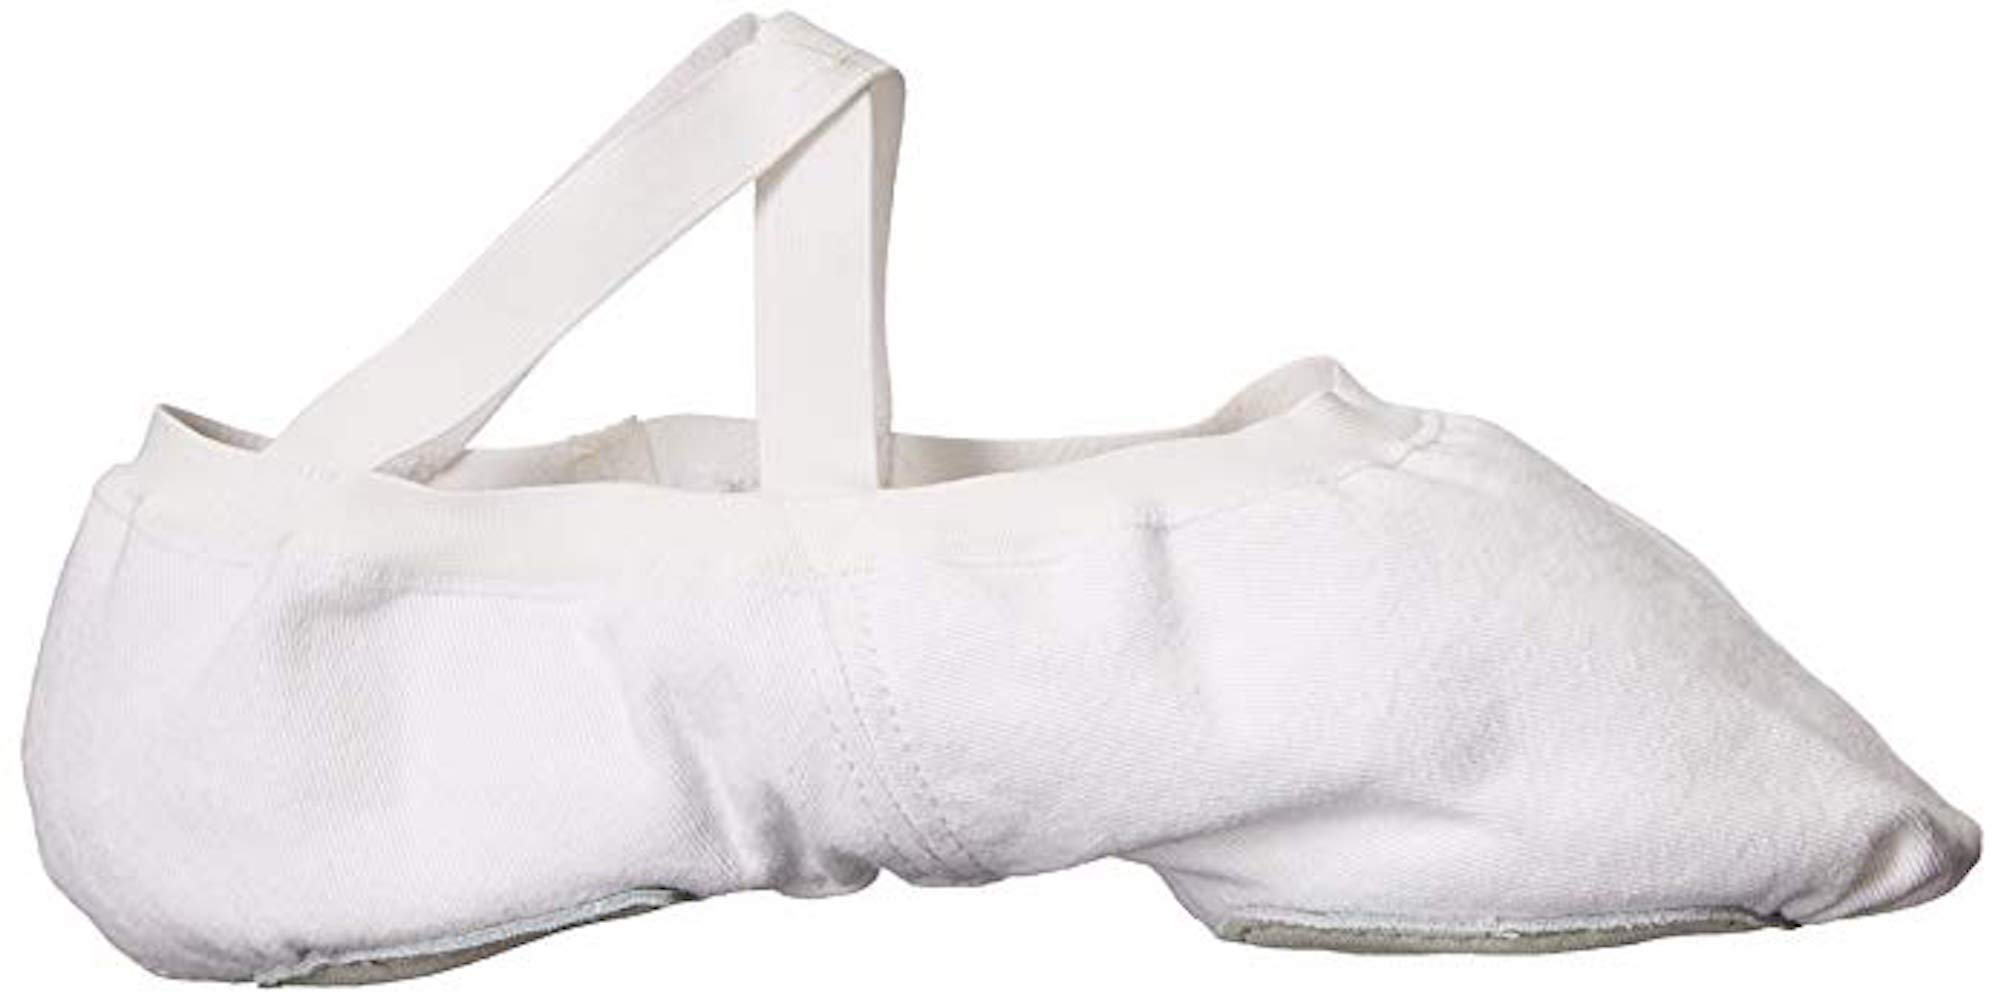 Bloch Dance Men's Pump Split Sole Canvas Ballet Slipper/Shoe